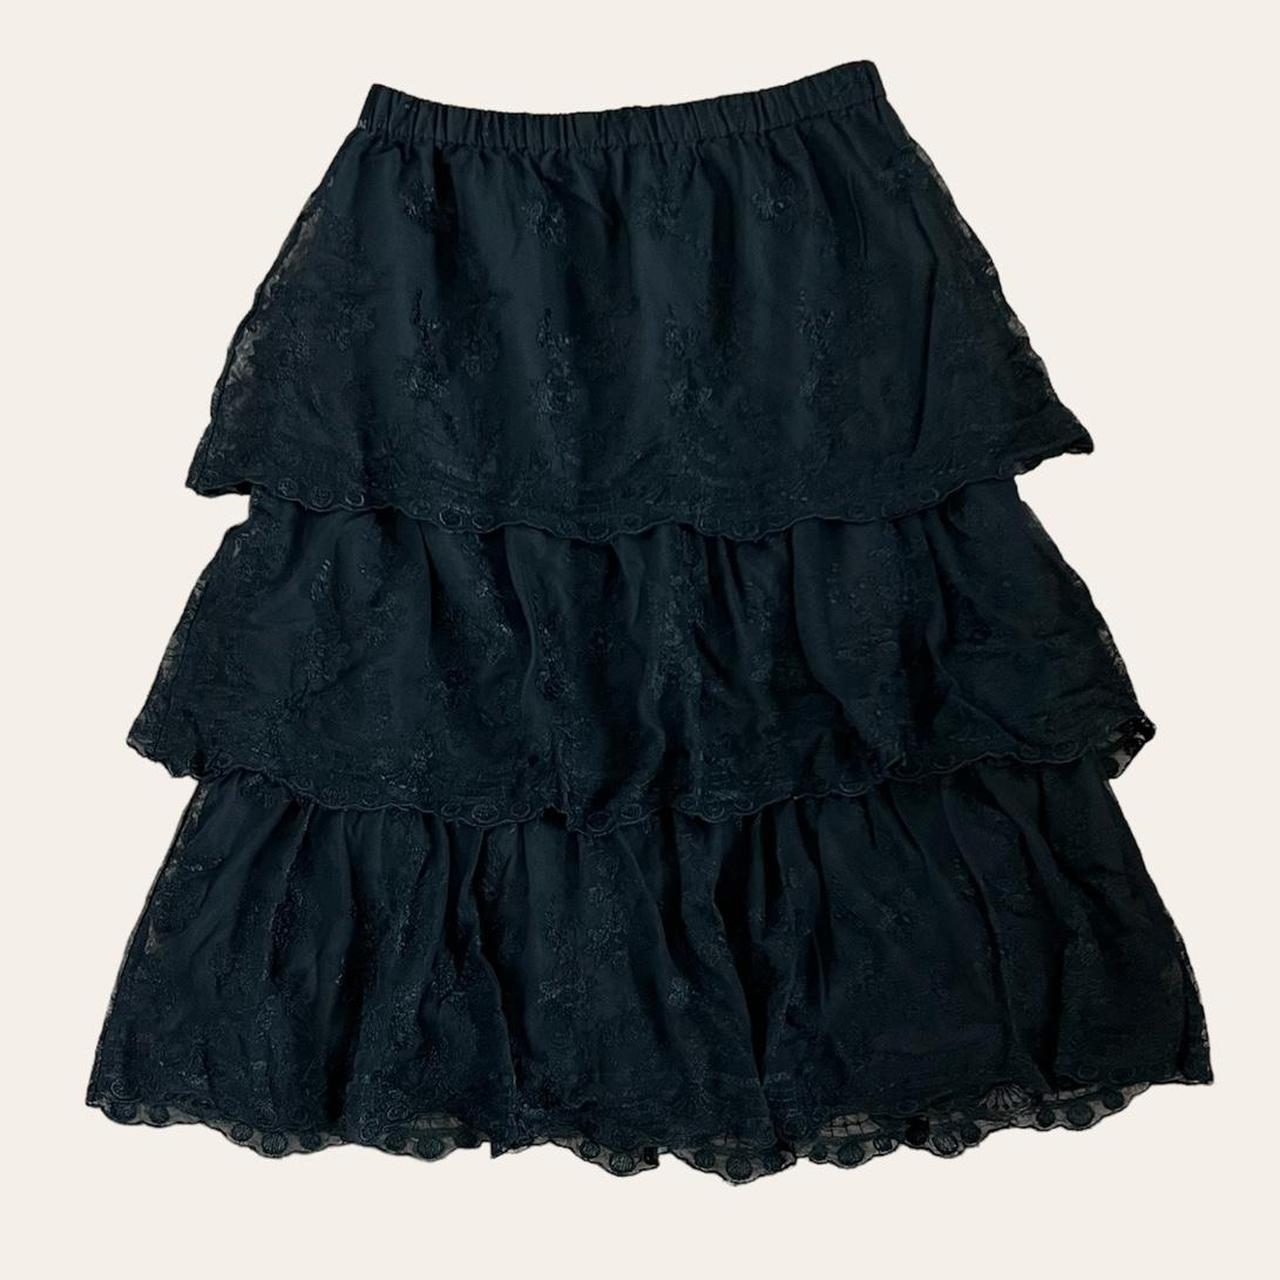 Black lace maxi skirt Vintage/ brand hunt club/ 3... - Depop